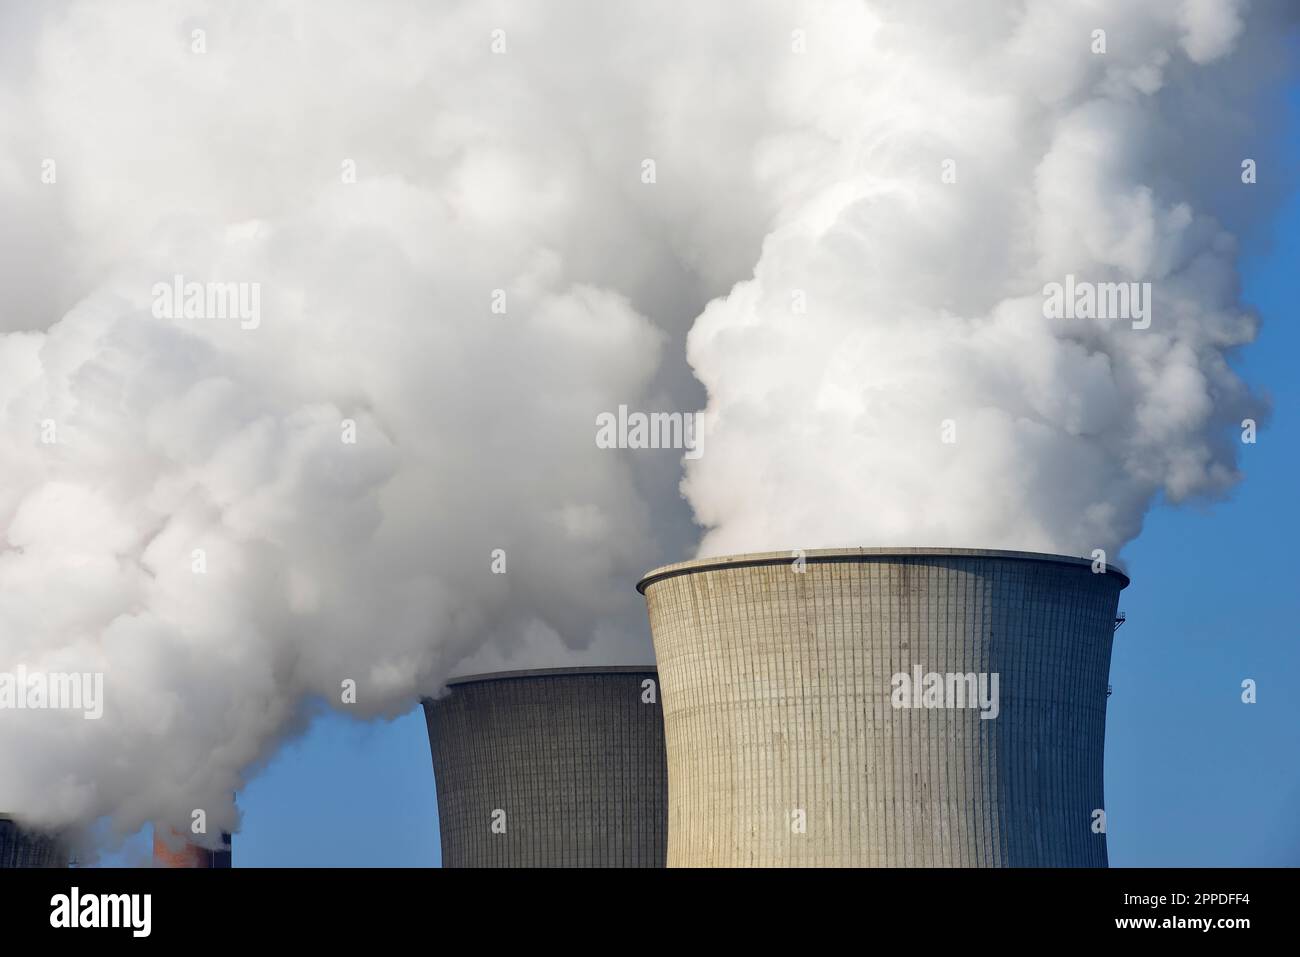 Germany, North Rhine Westphalia, Neurath, Cooling towers releasing clouds of water vapor Stock Photo